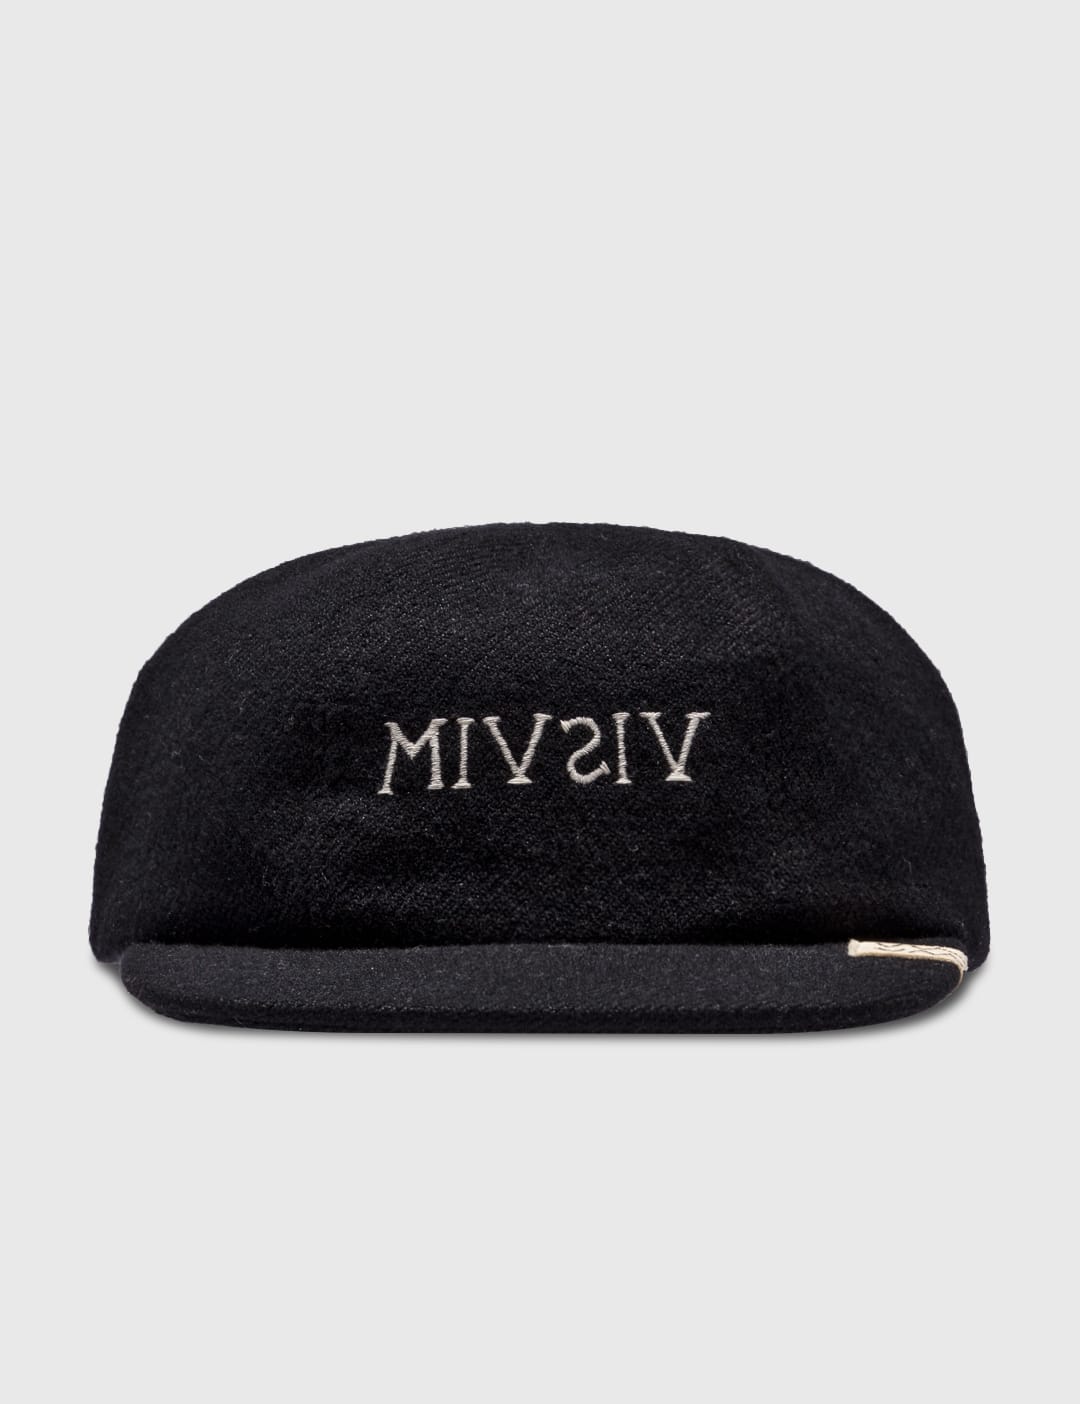 Visvim - visvim wool cap | HBX - Globally Curated Fashion and Lifestyle by  Hypebeast